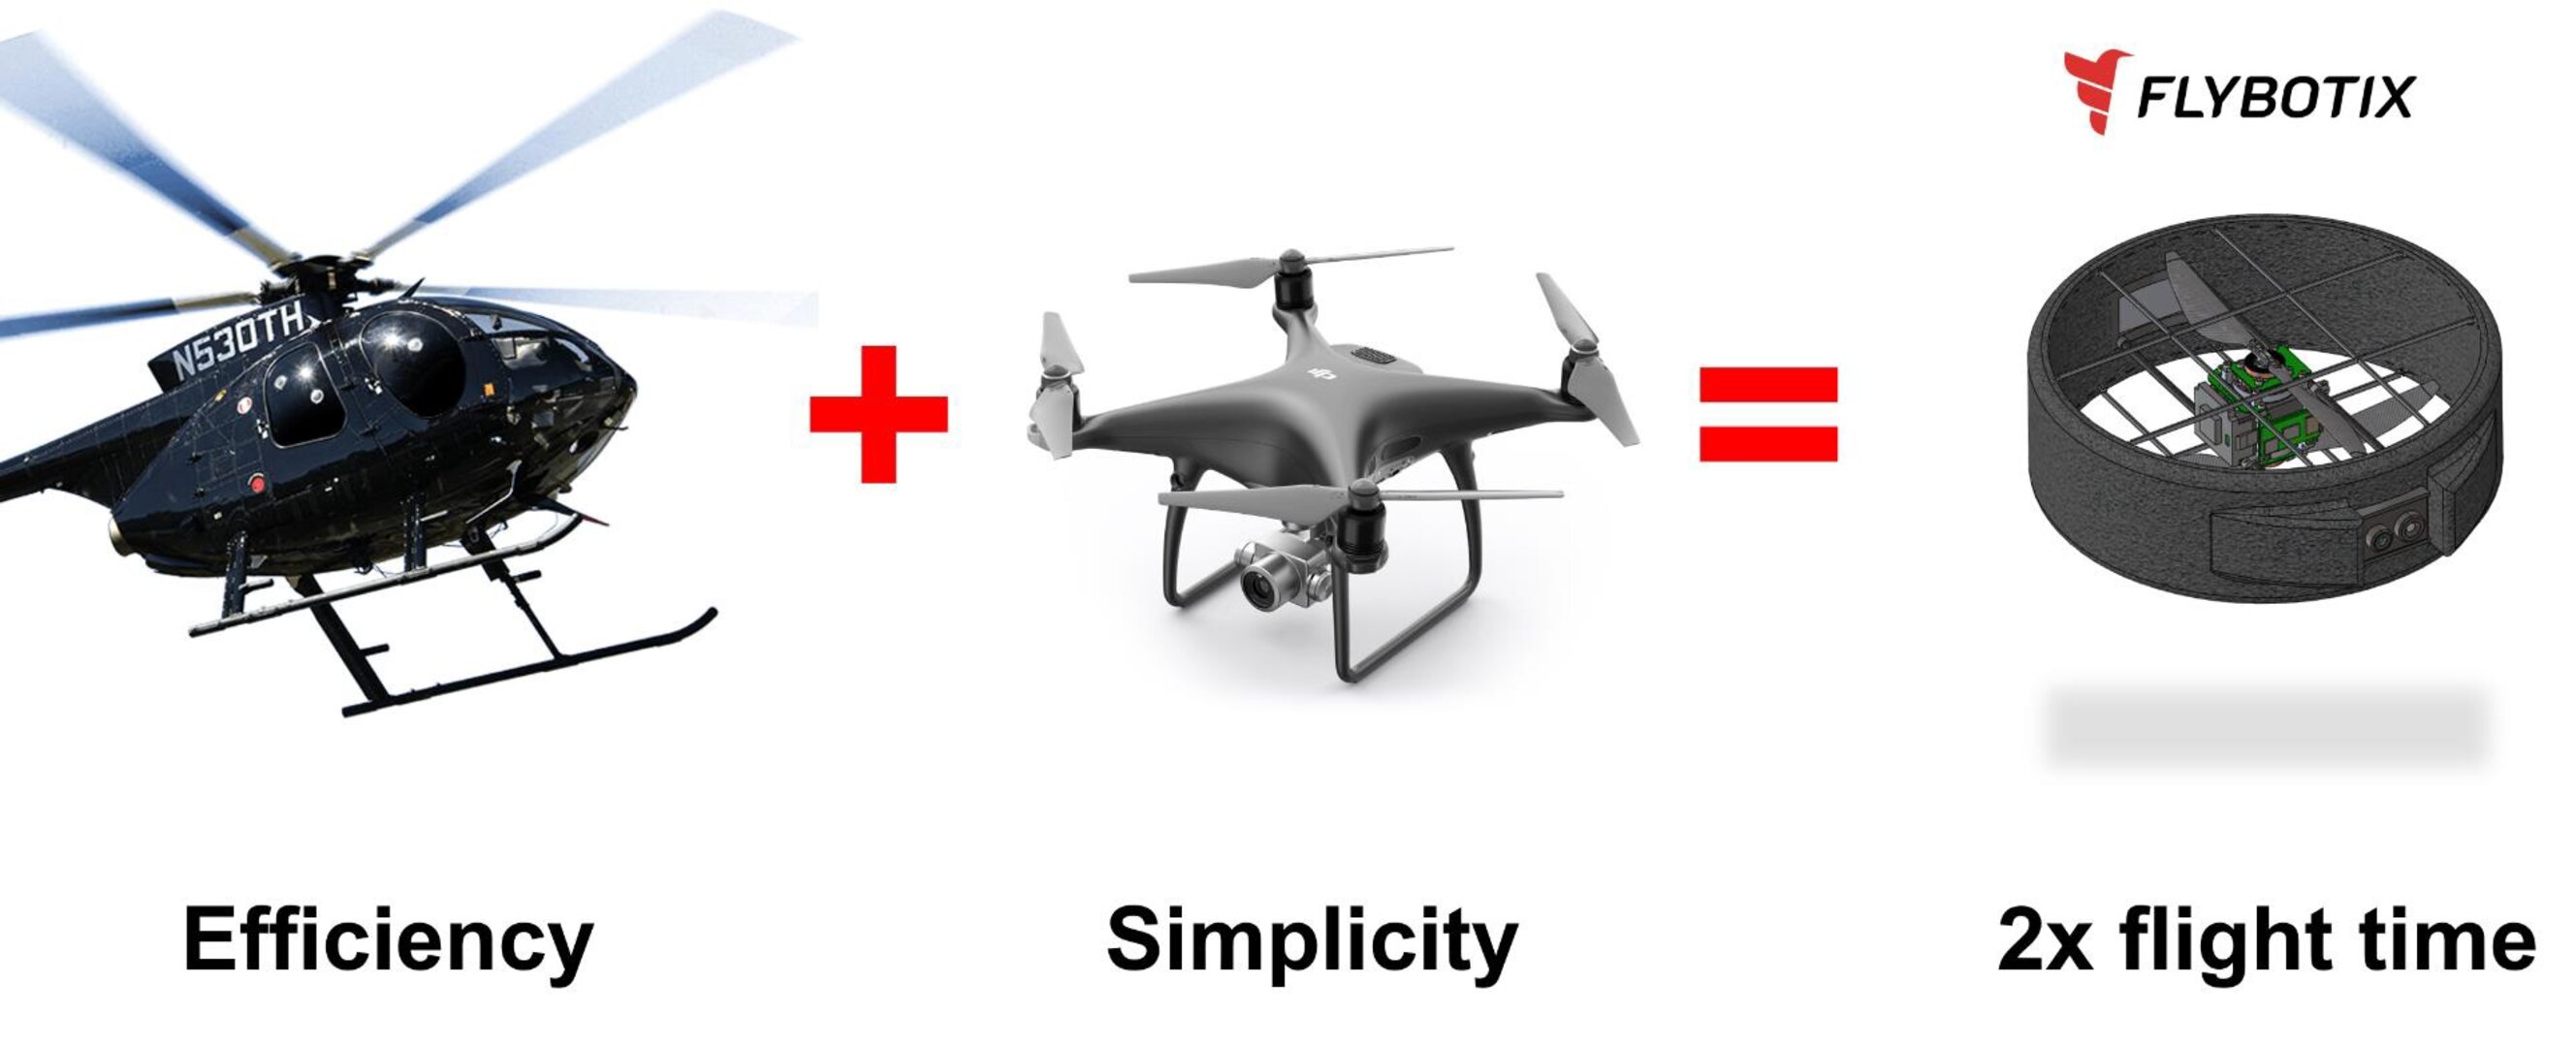 Flybotix drone concept